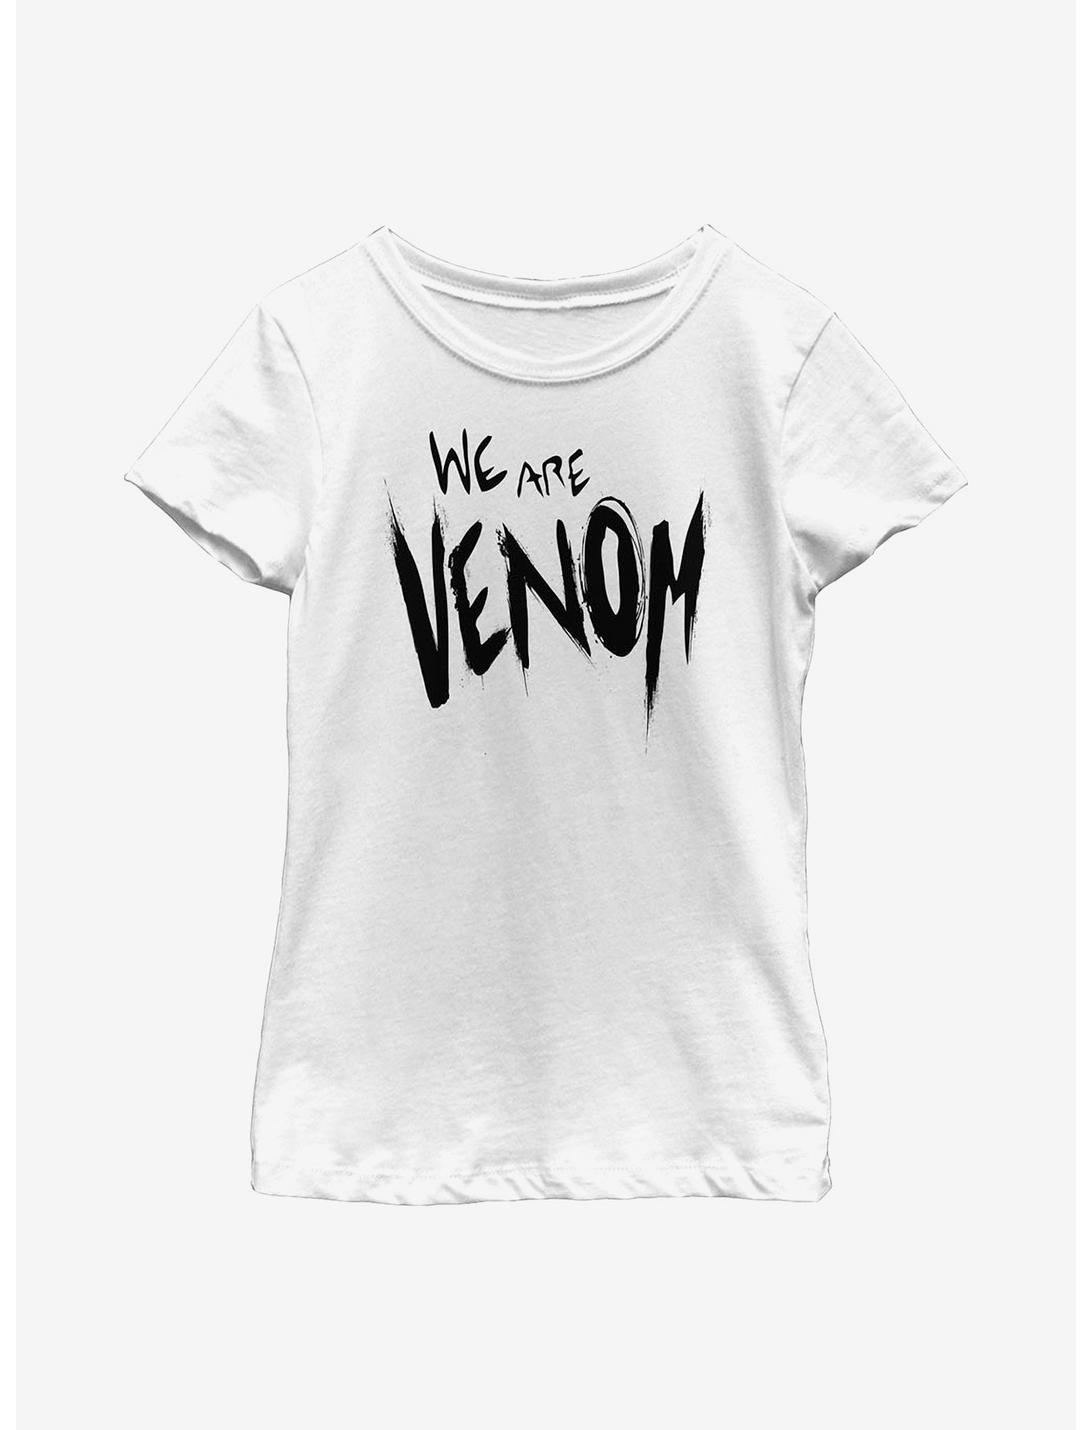 Marvel Venom We Are Venom Slime Youth Girls T-Shirt, WHITE, hi-res